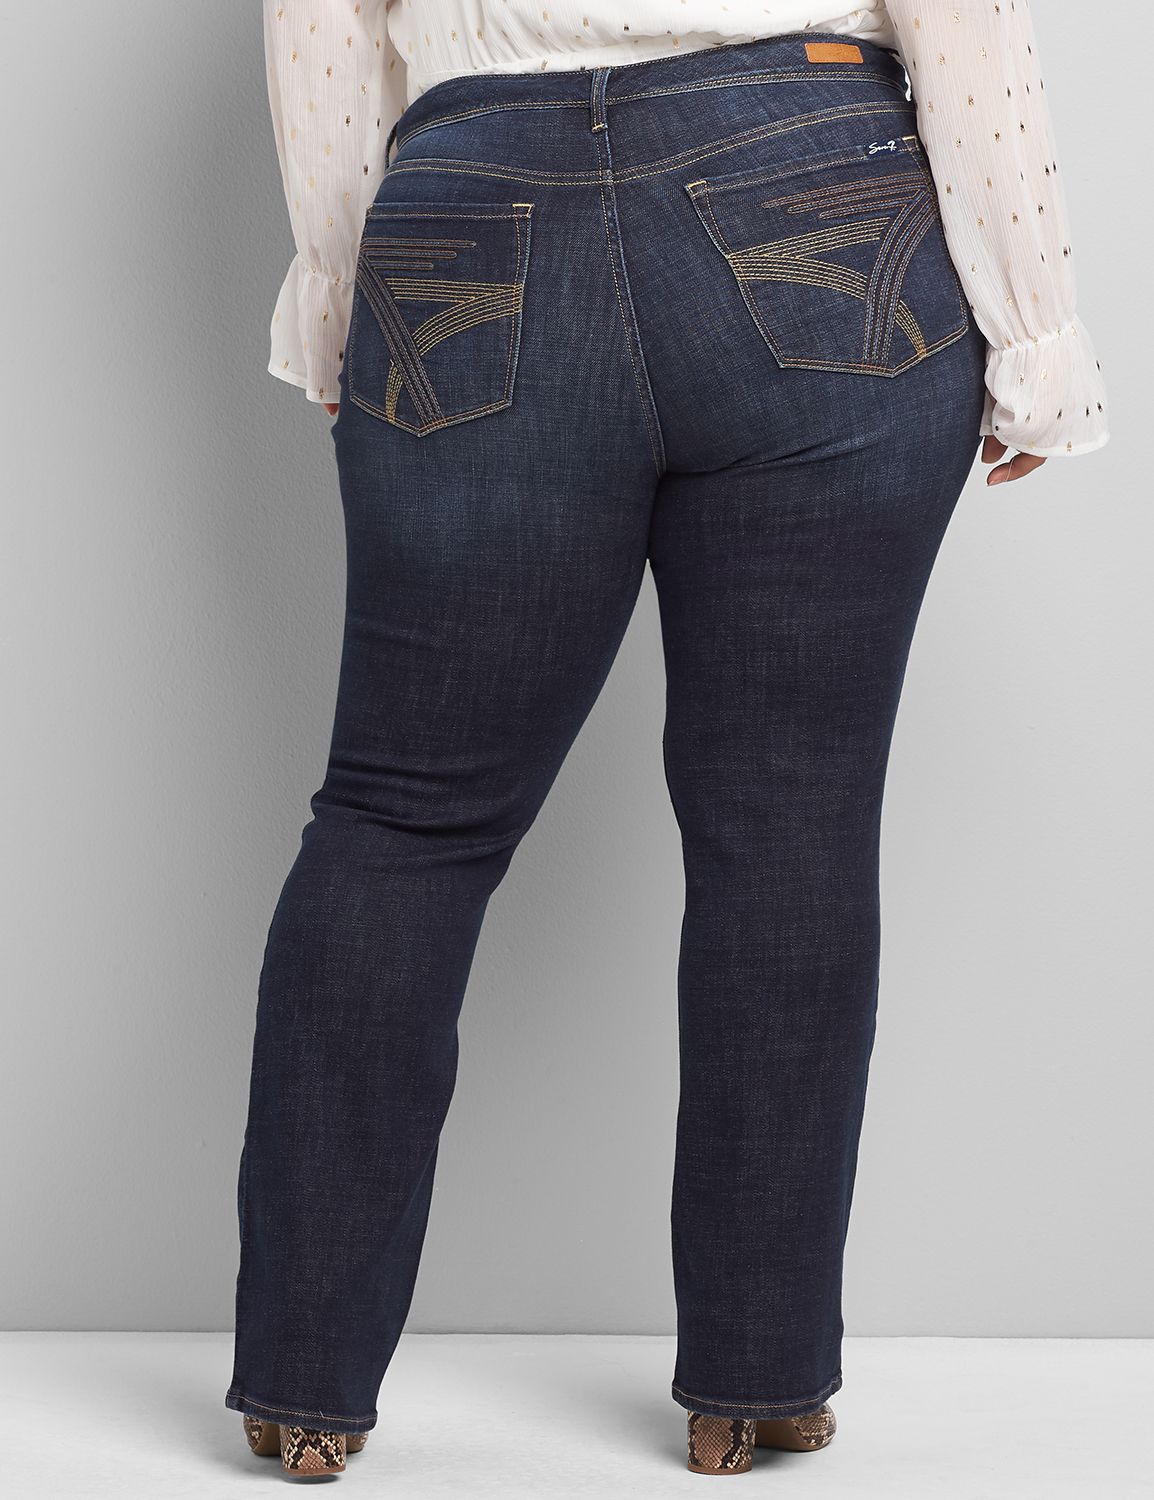 crosshatch black label slim fit jeans